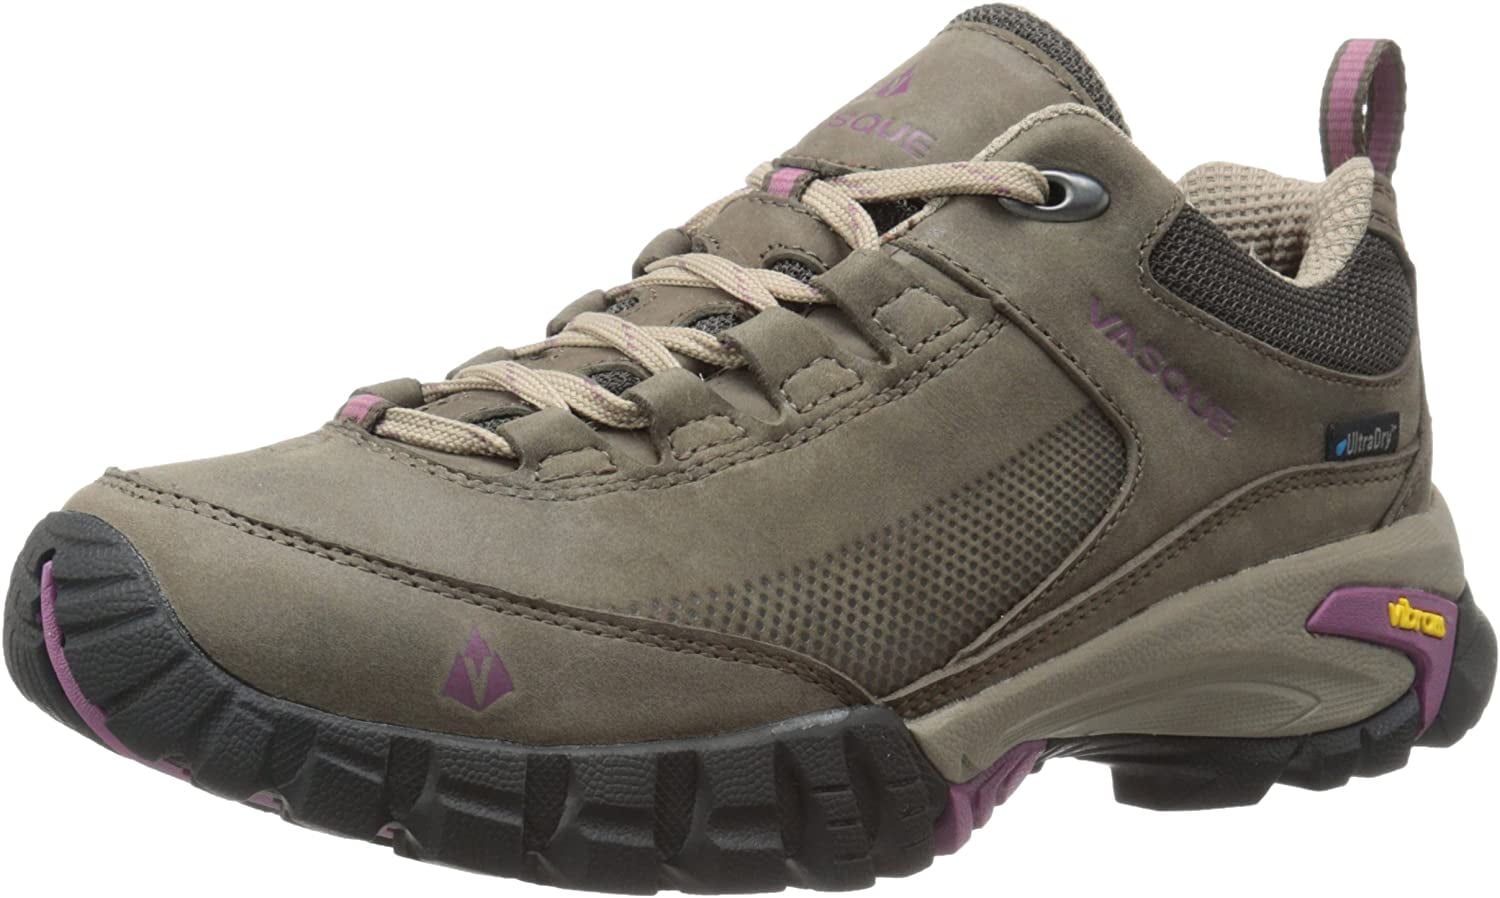 Vasque Women's Talus Trek Low UltraDry Hiking Shoe, Black Olive/Damson ...